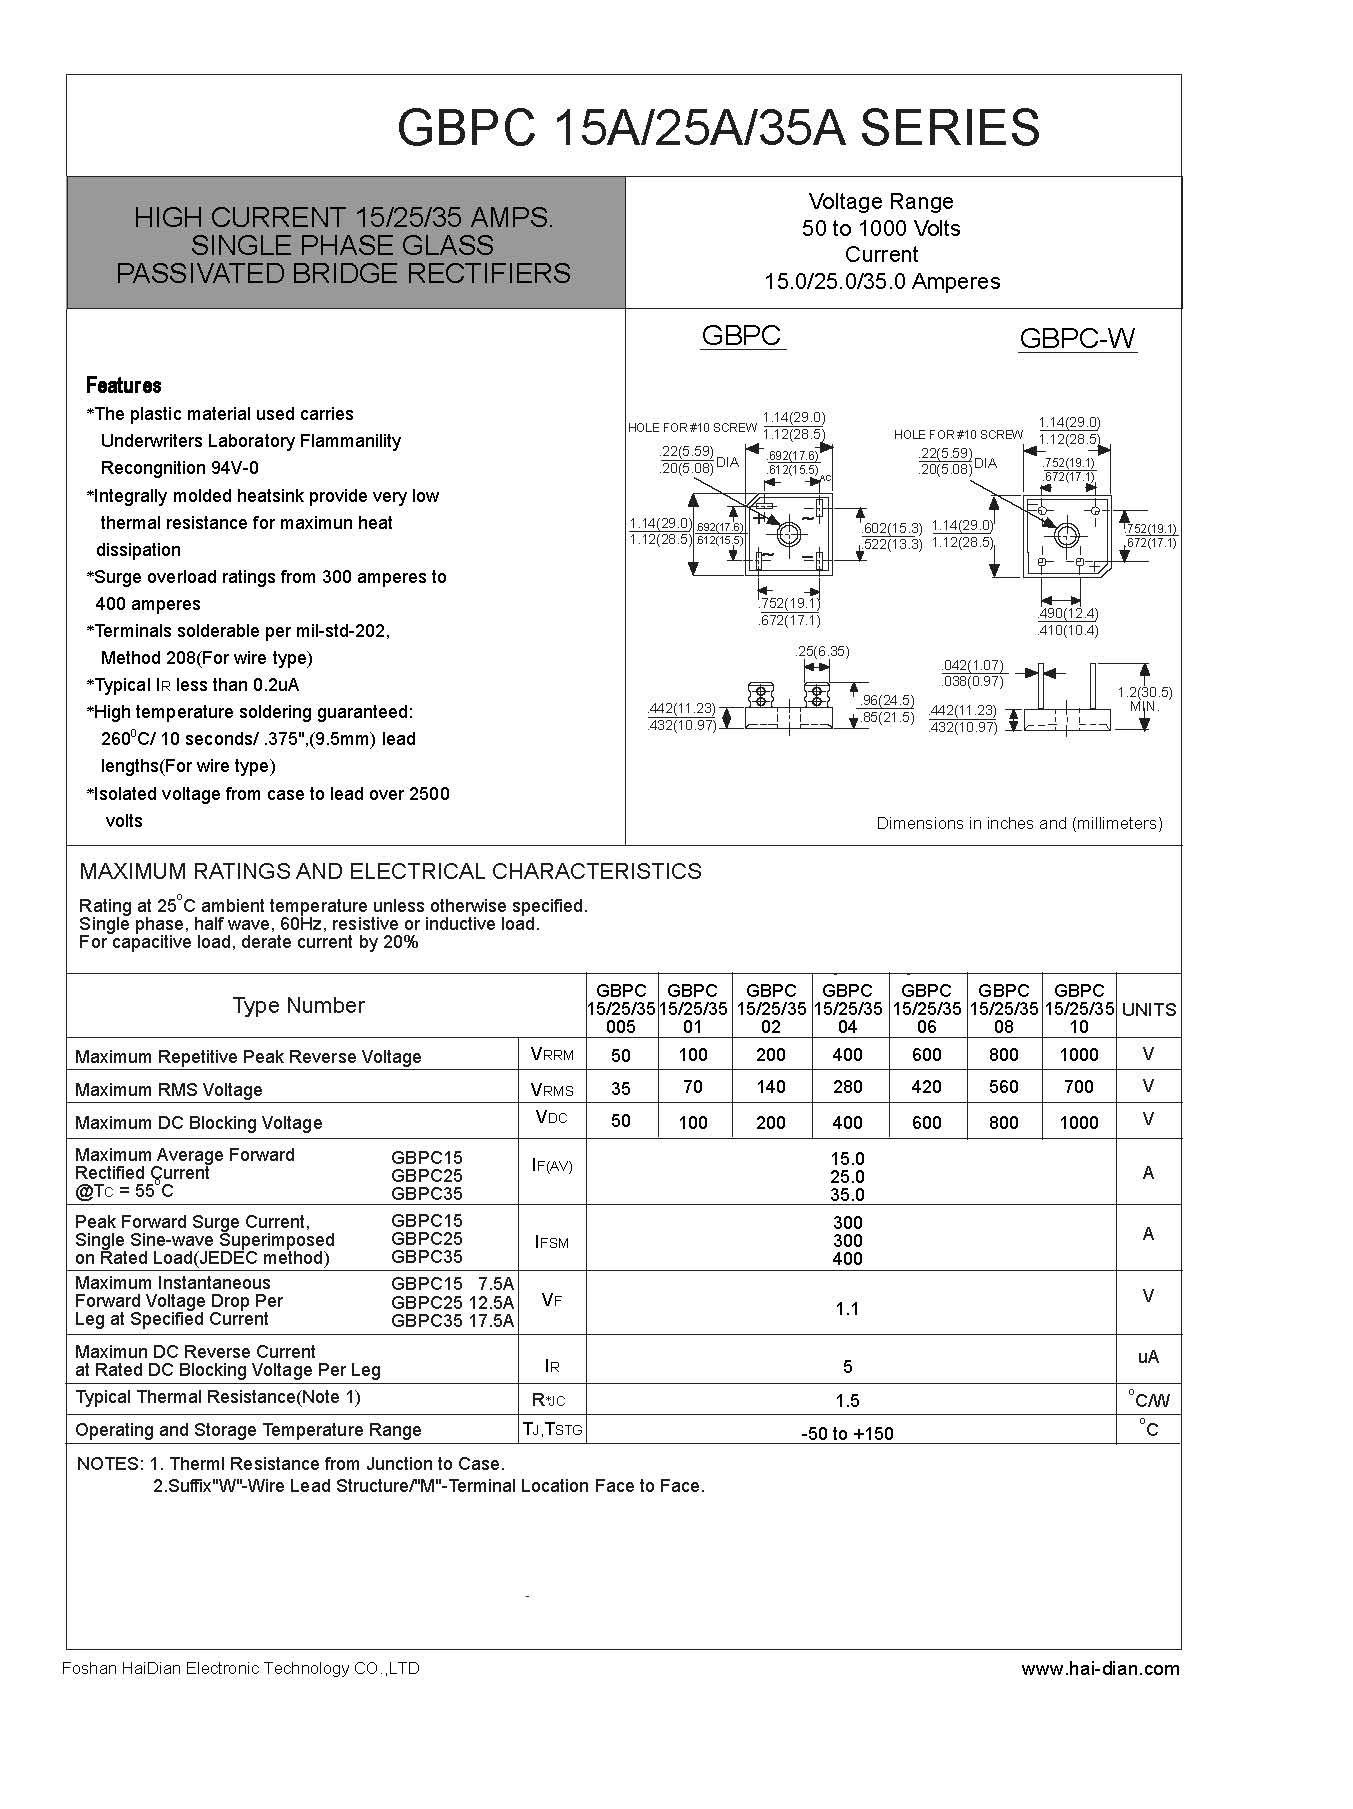 GBPC3506桥式整流器(整流桥堆)-- 佛山海电电子科技有限公司